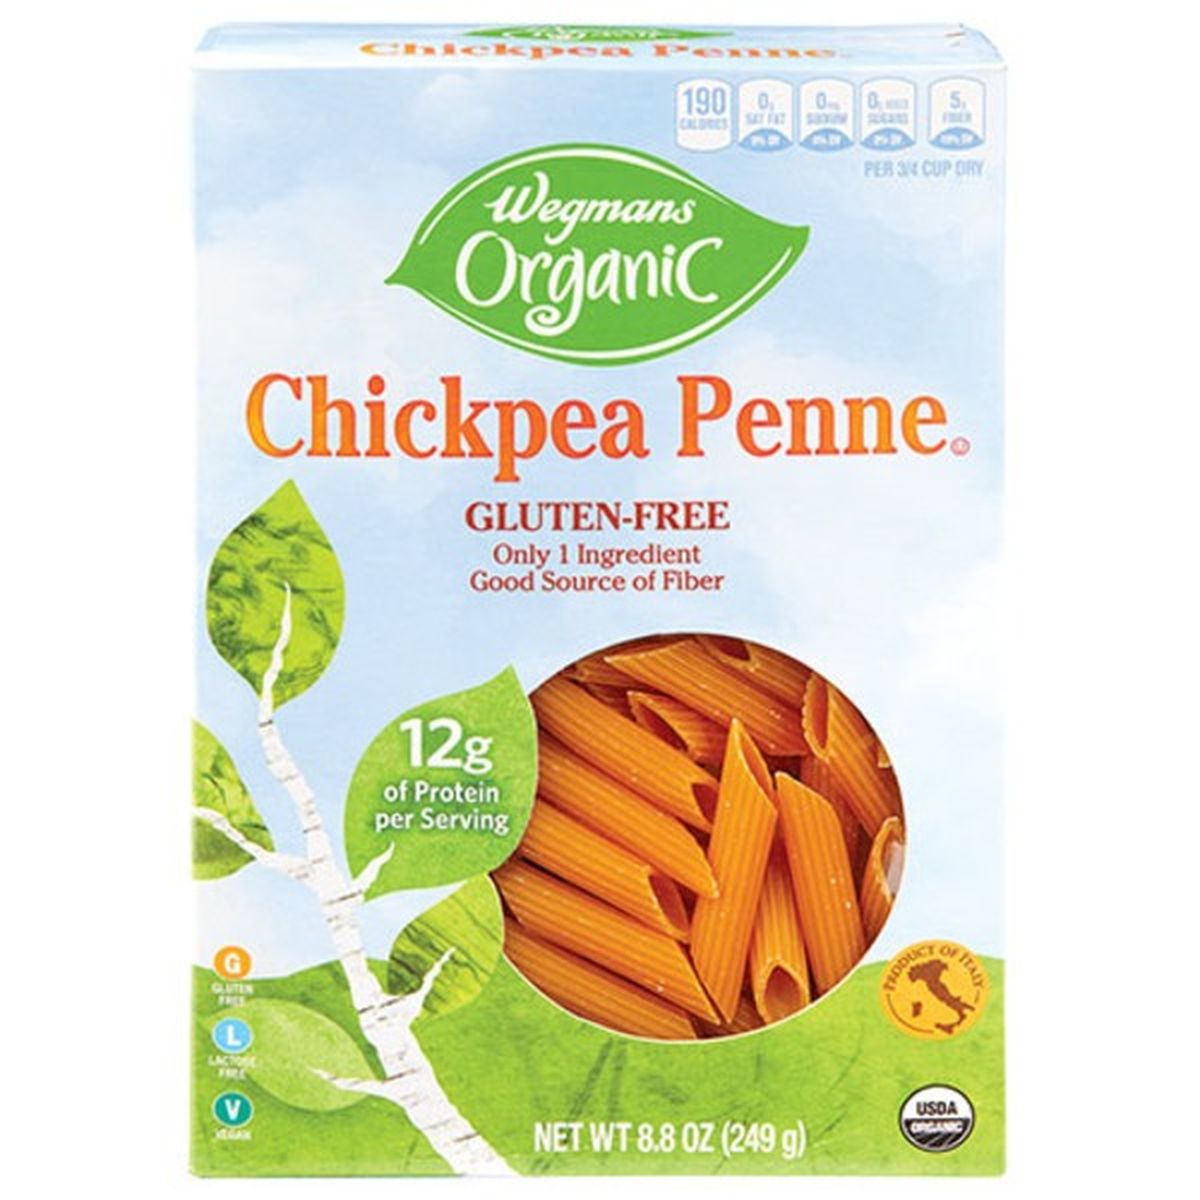 Calories in Wegmans Organic Gluten-Free Chickpea Penne Pasta